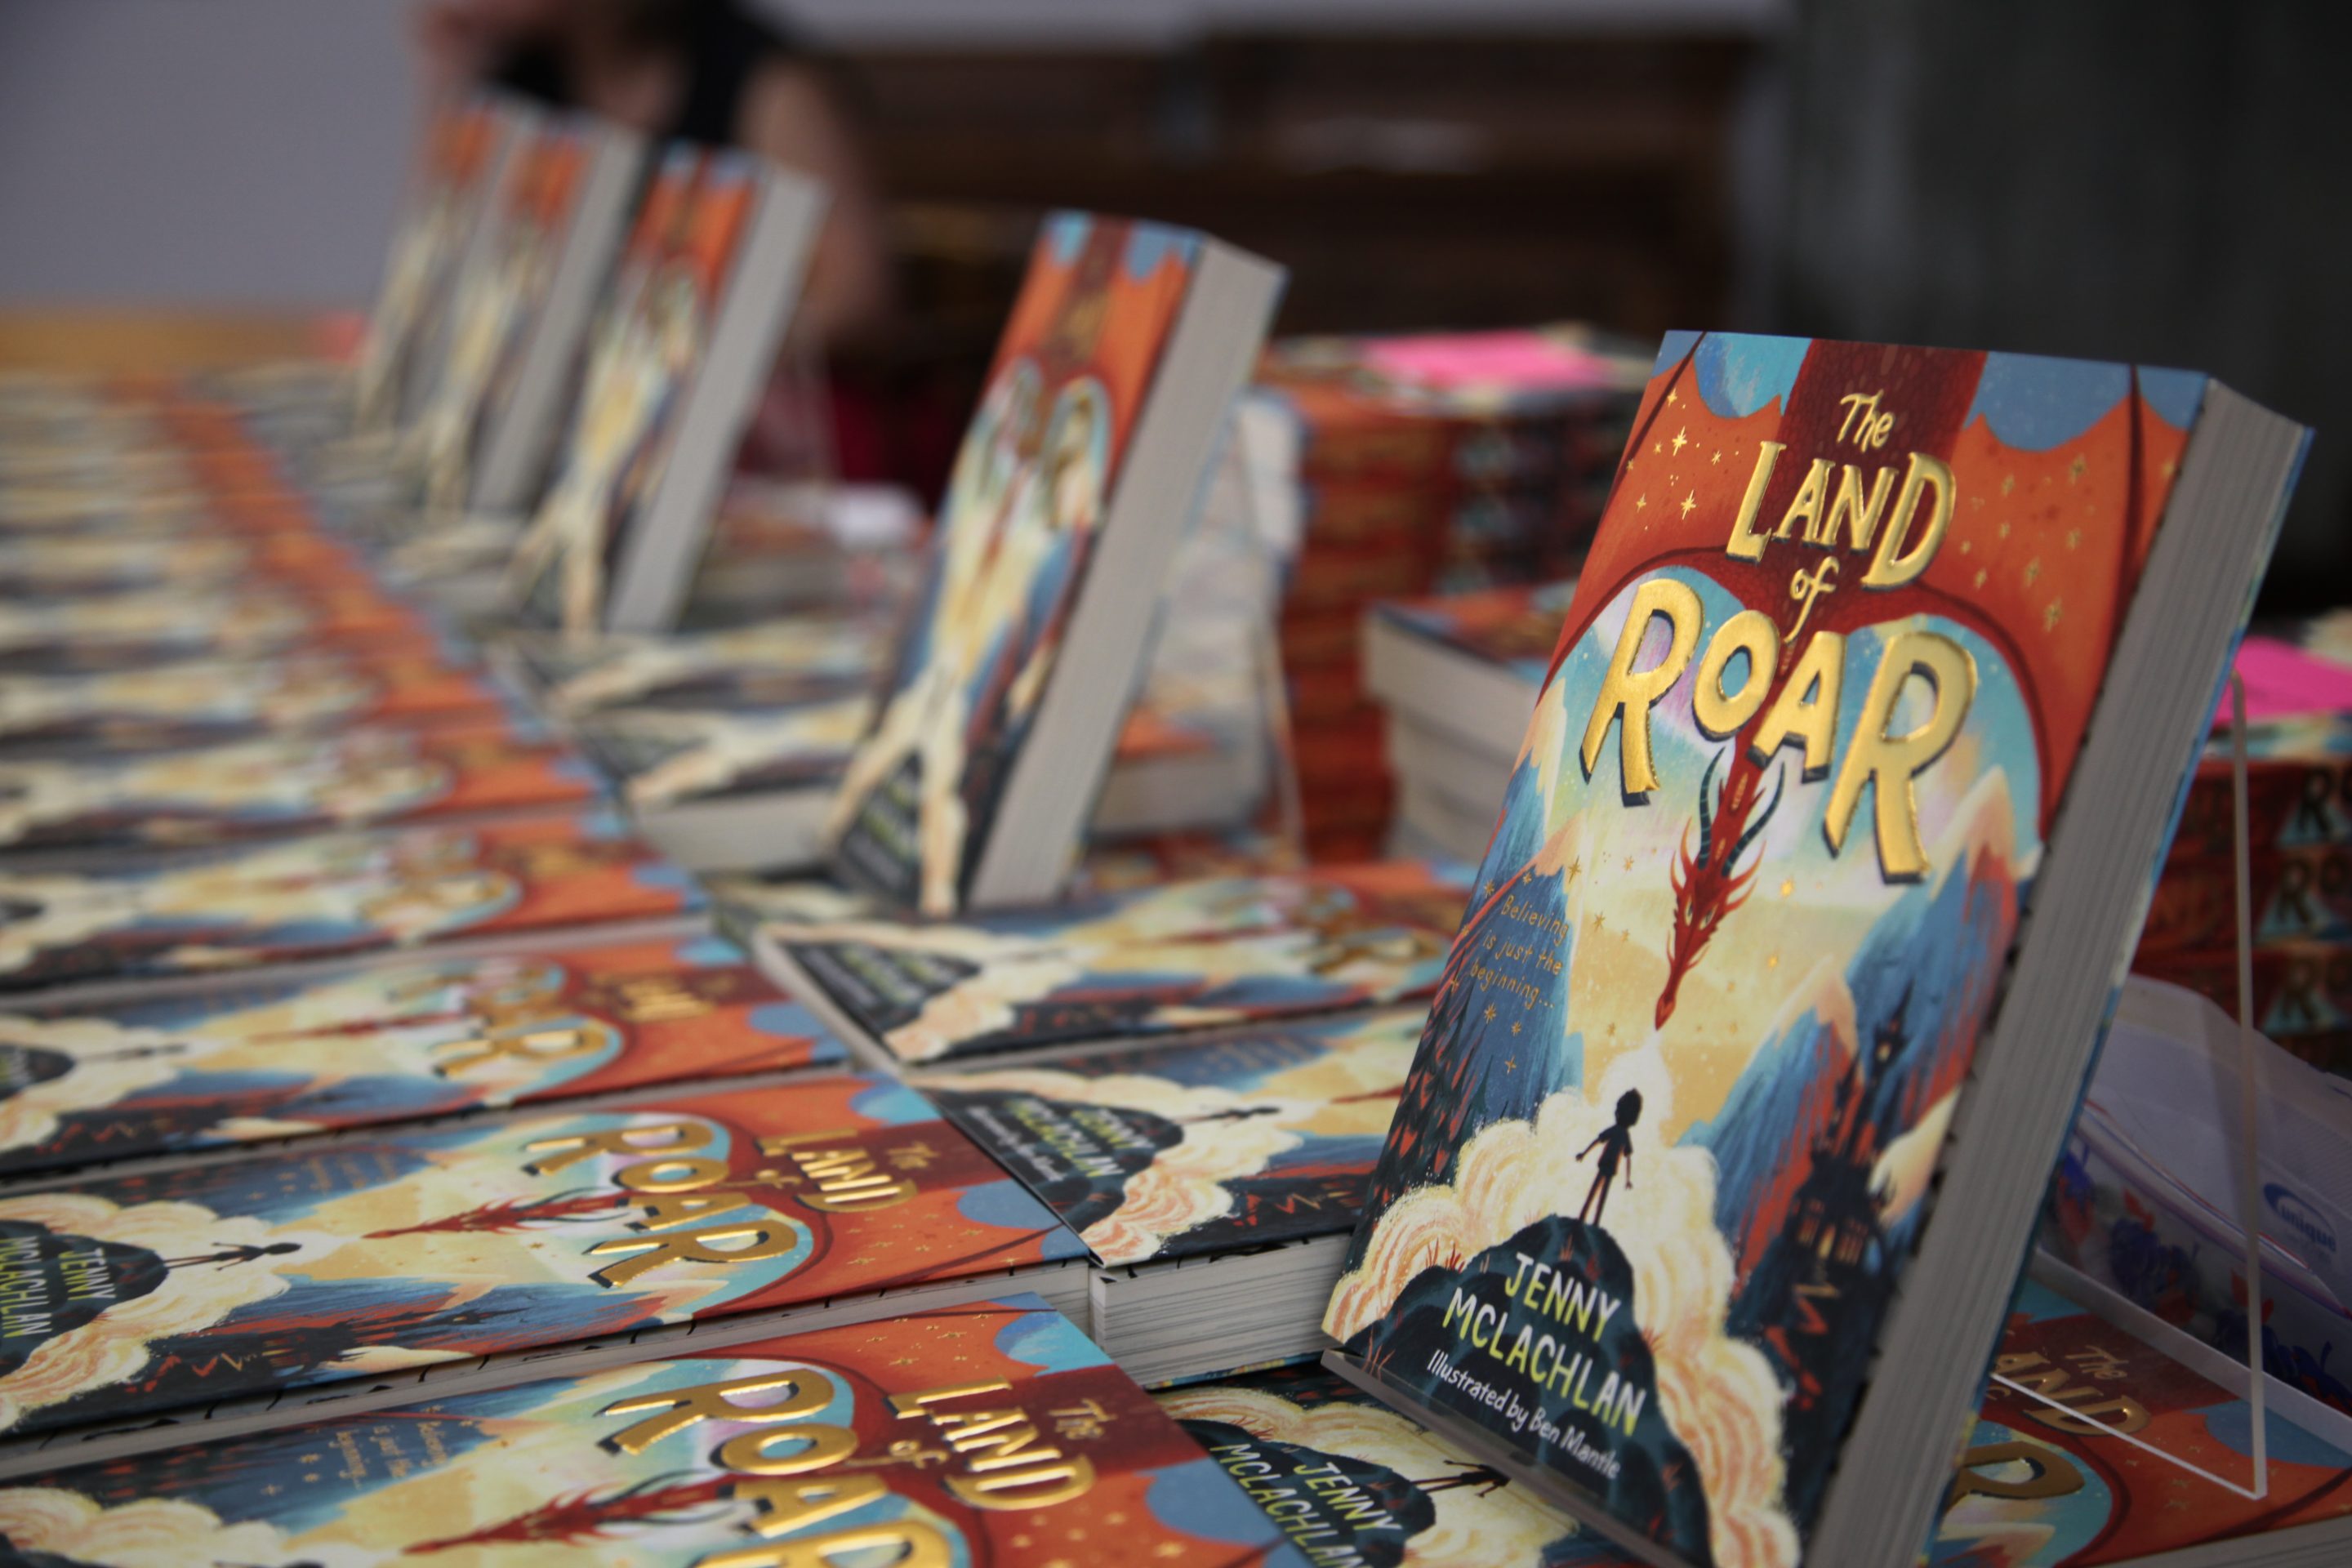 Land of Roar Series 3 Books Collection Set by Jenny McLachlan by Jenny  McLachlan